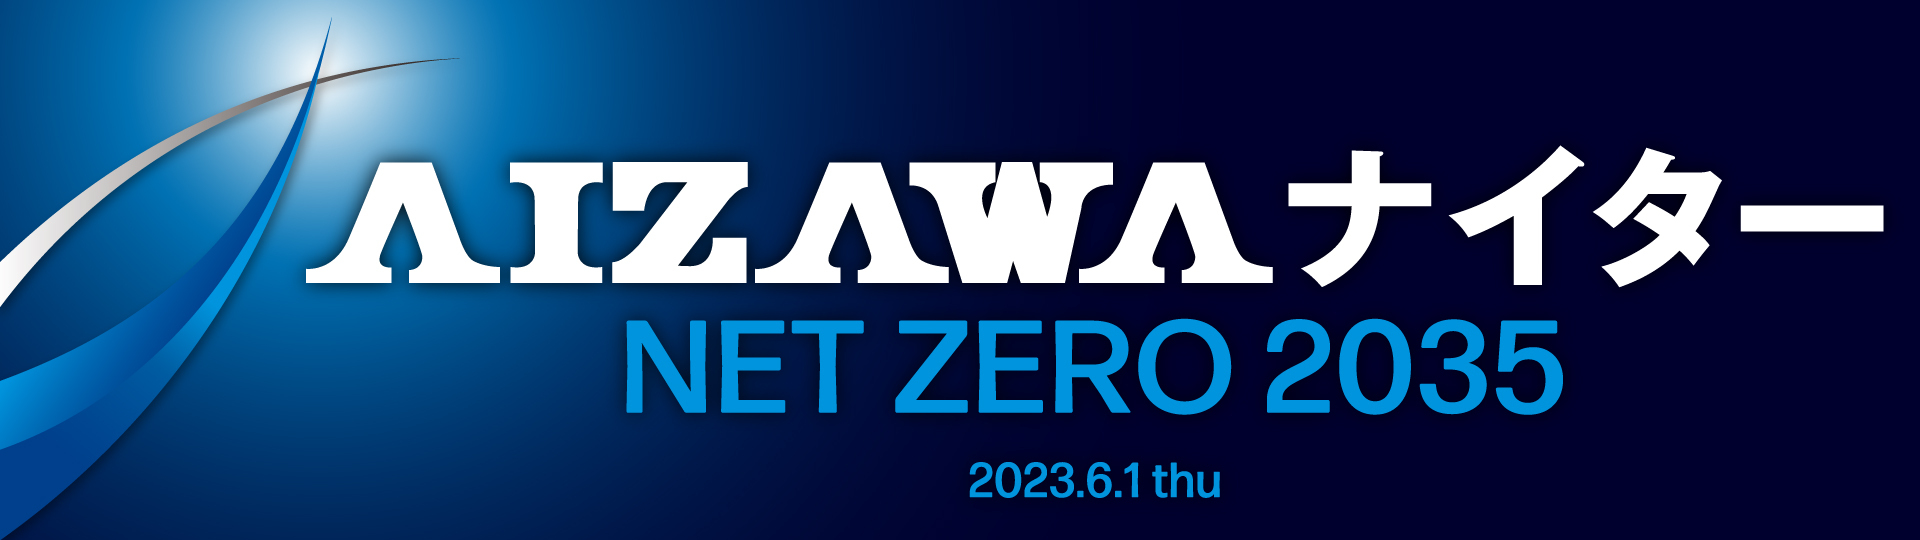 AIZAWAナイター NET ZERO 2035